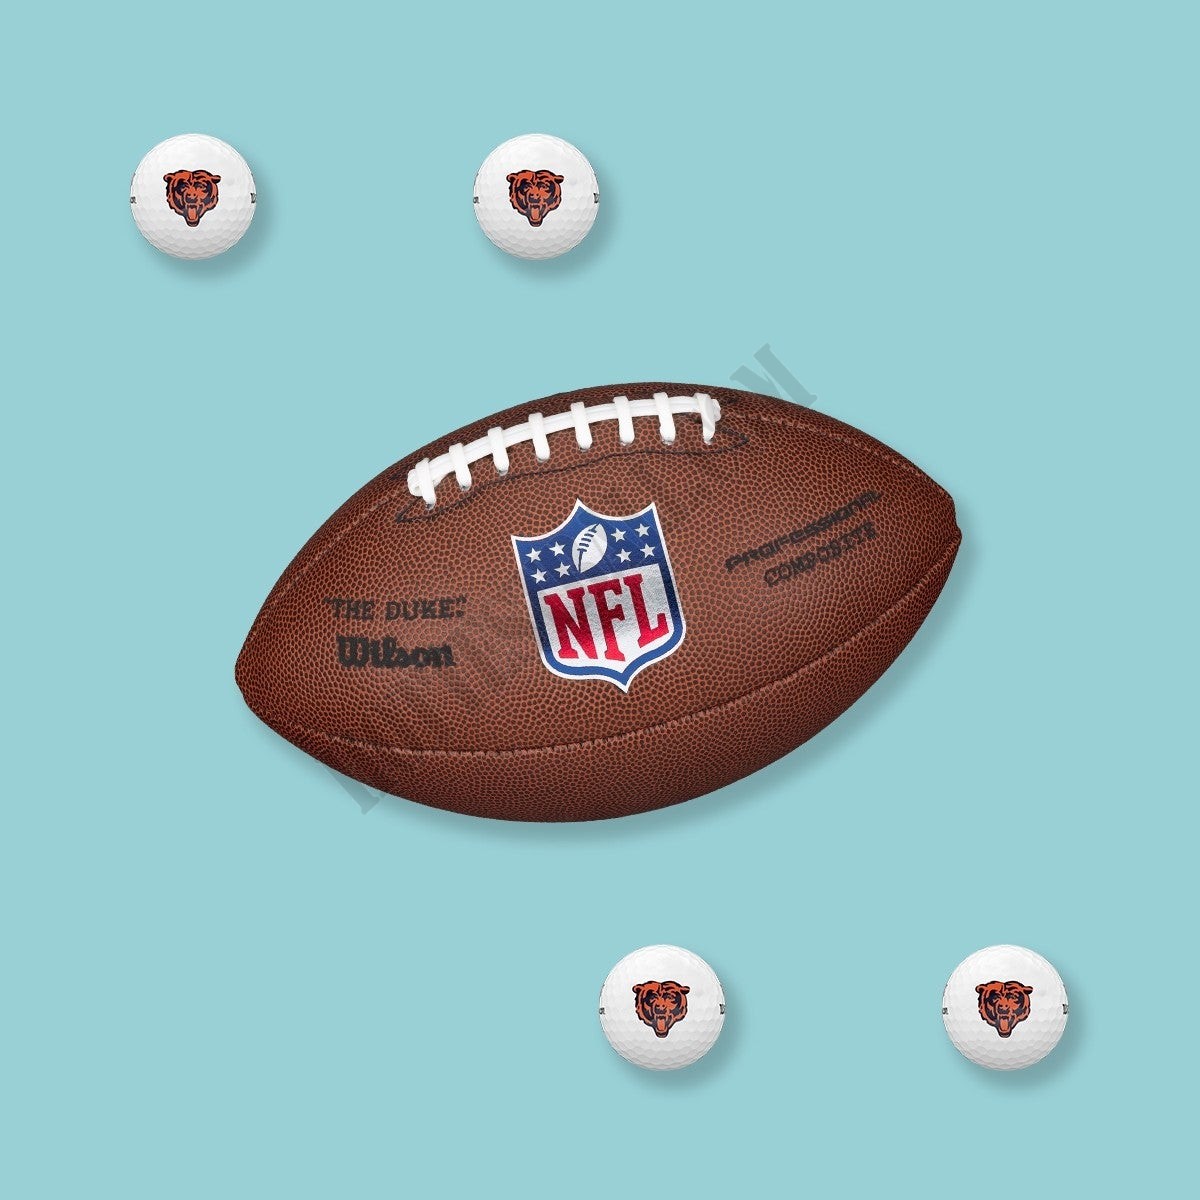 NFL Duke Replica Football Bundle - Pick Your Team - Wilson Discount Store - NFL Duke Replica Football Bundle - Pick Your Team - Wilson Discount Store